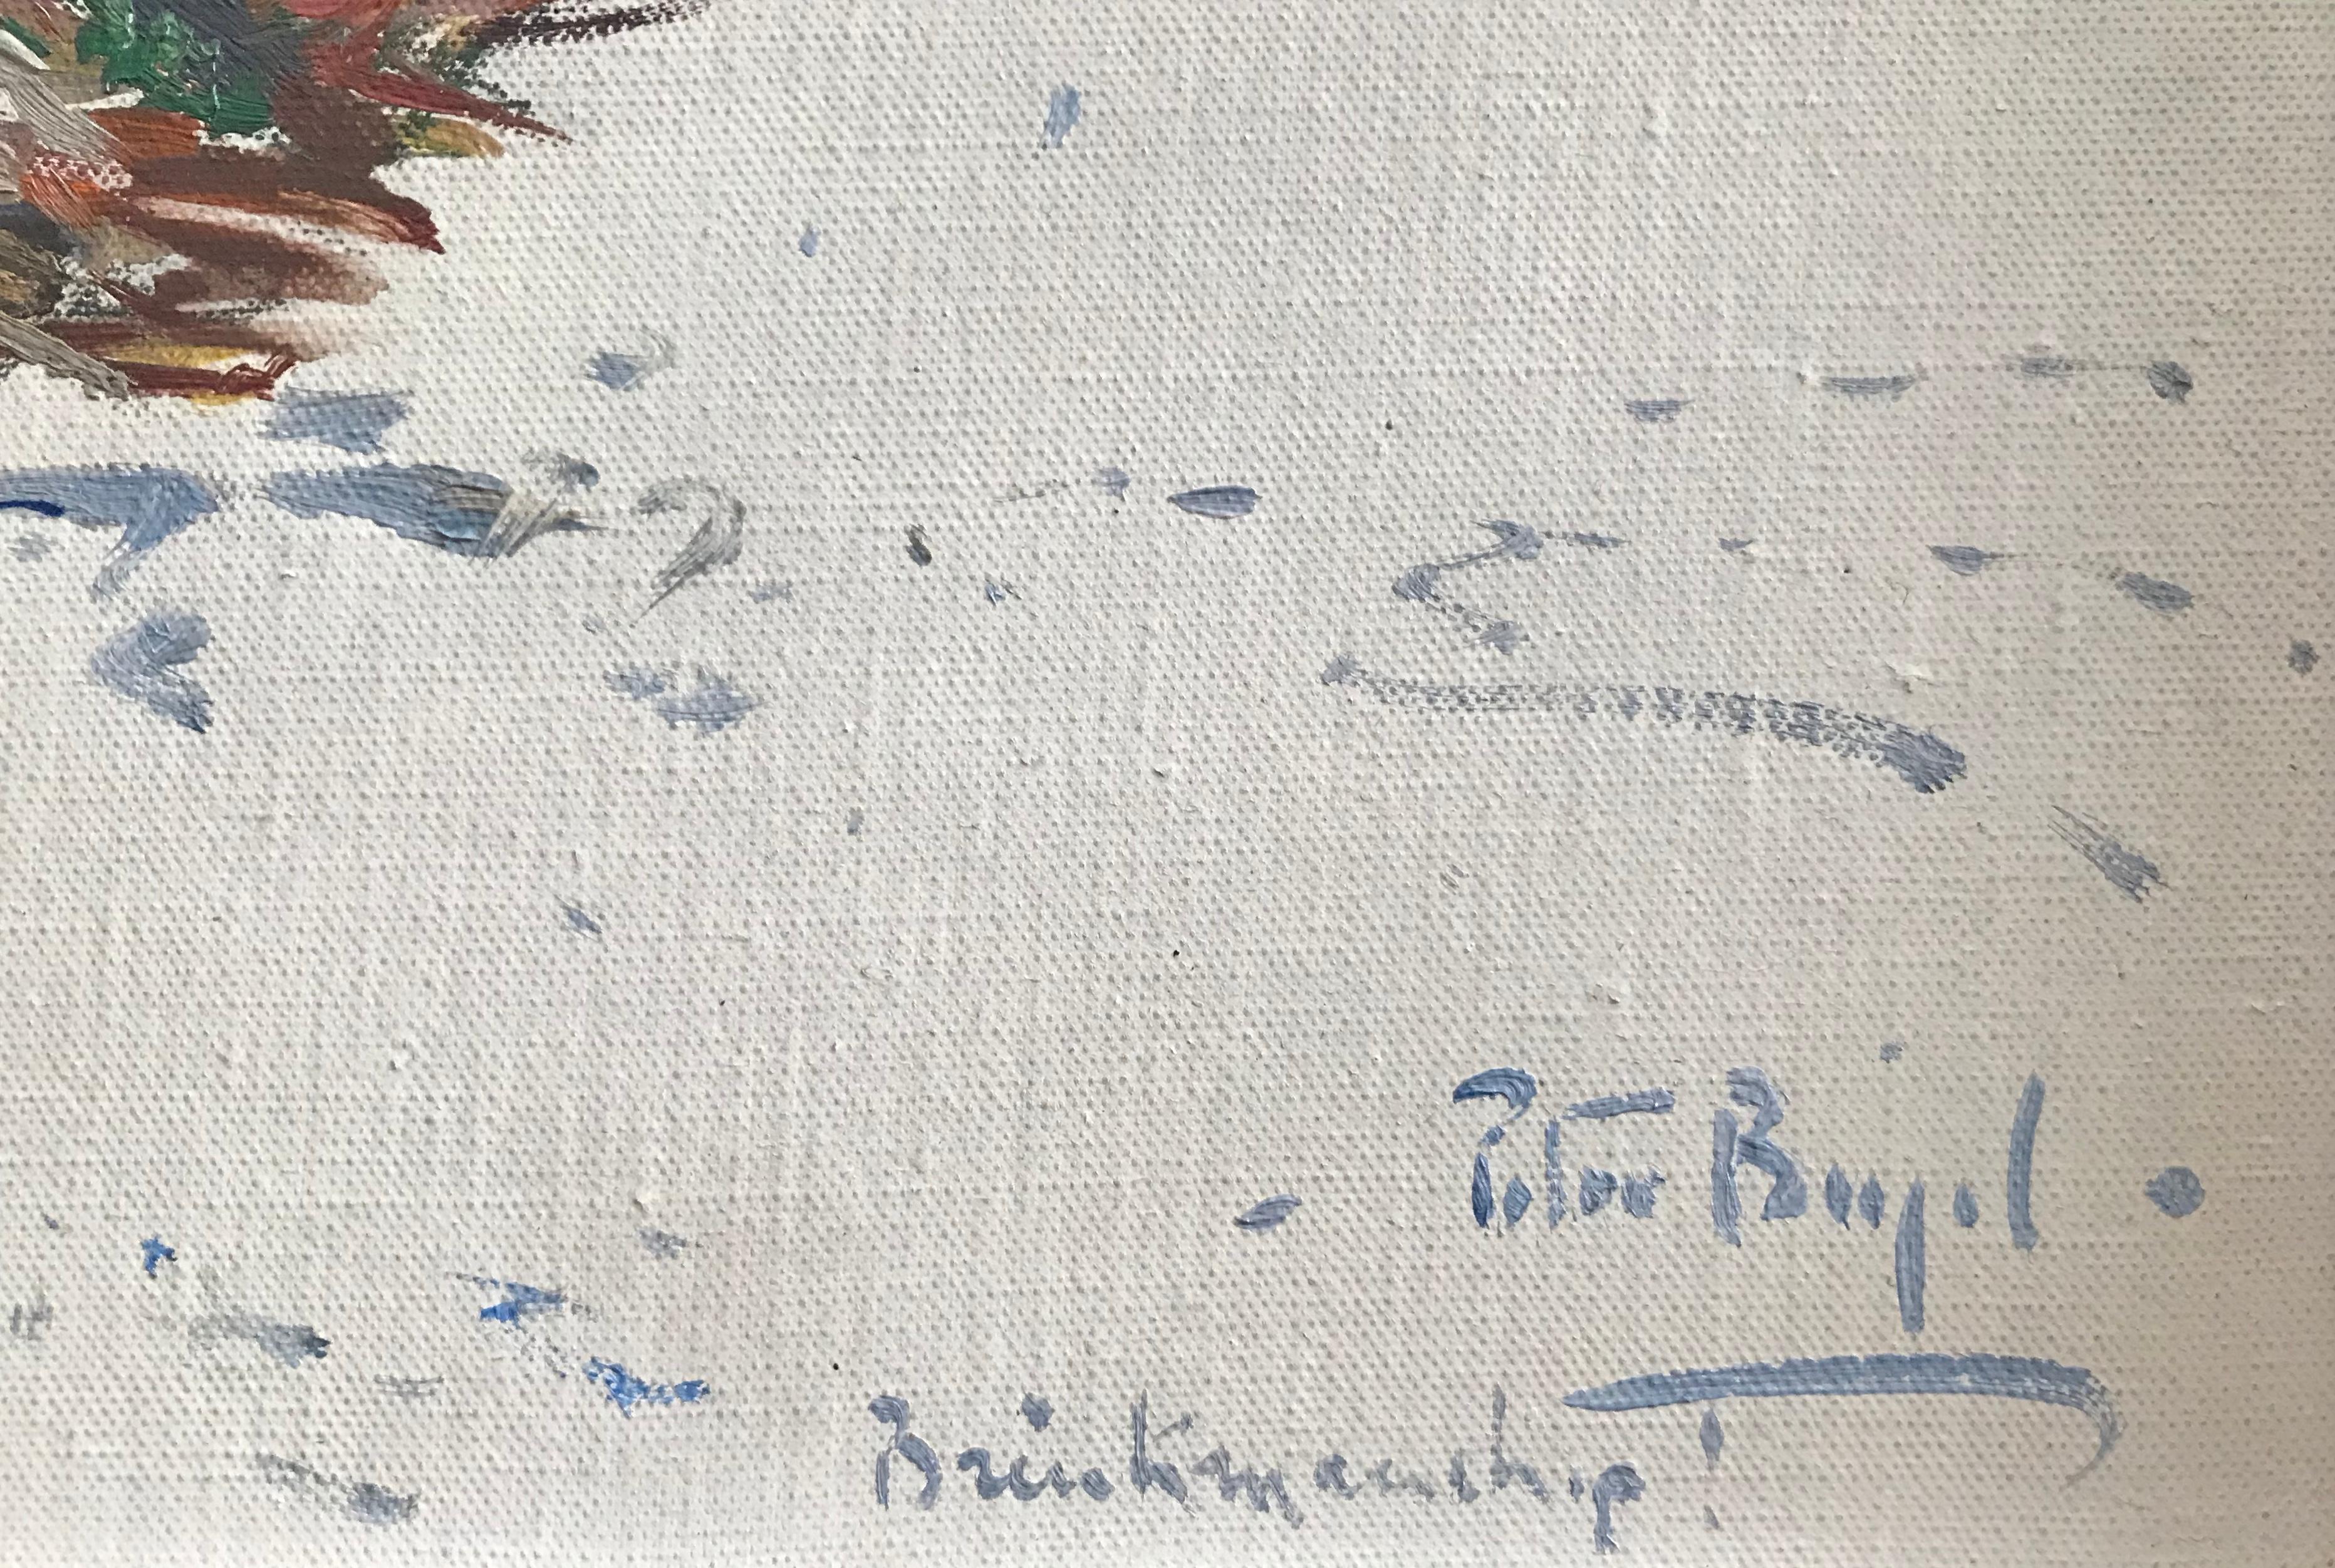 Brinkmanship, Pheasants in the snow, Sporting Art by Peter Biegel 1